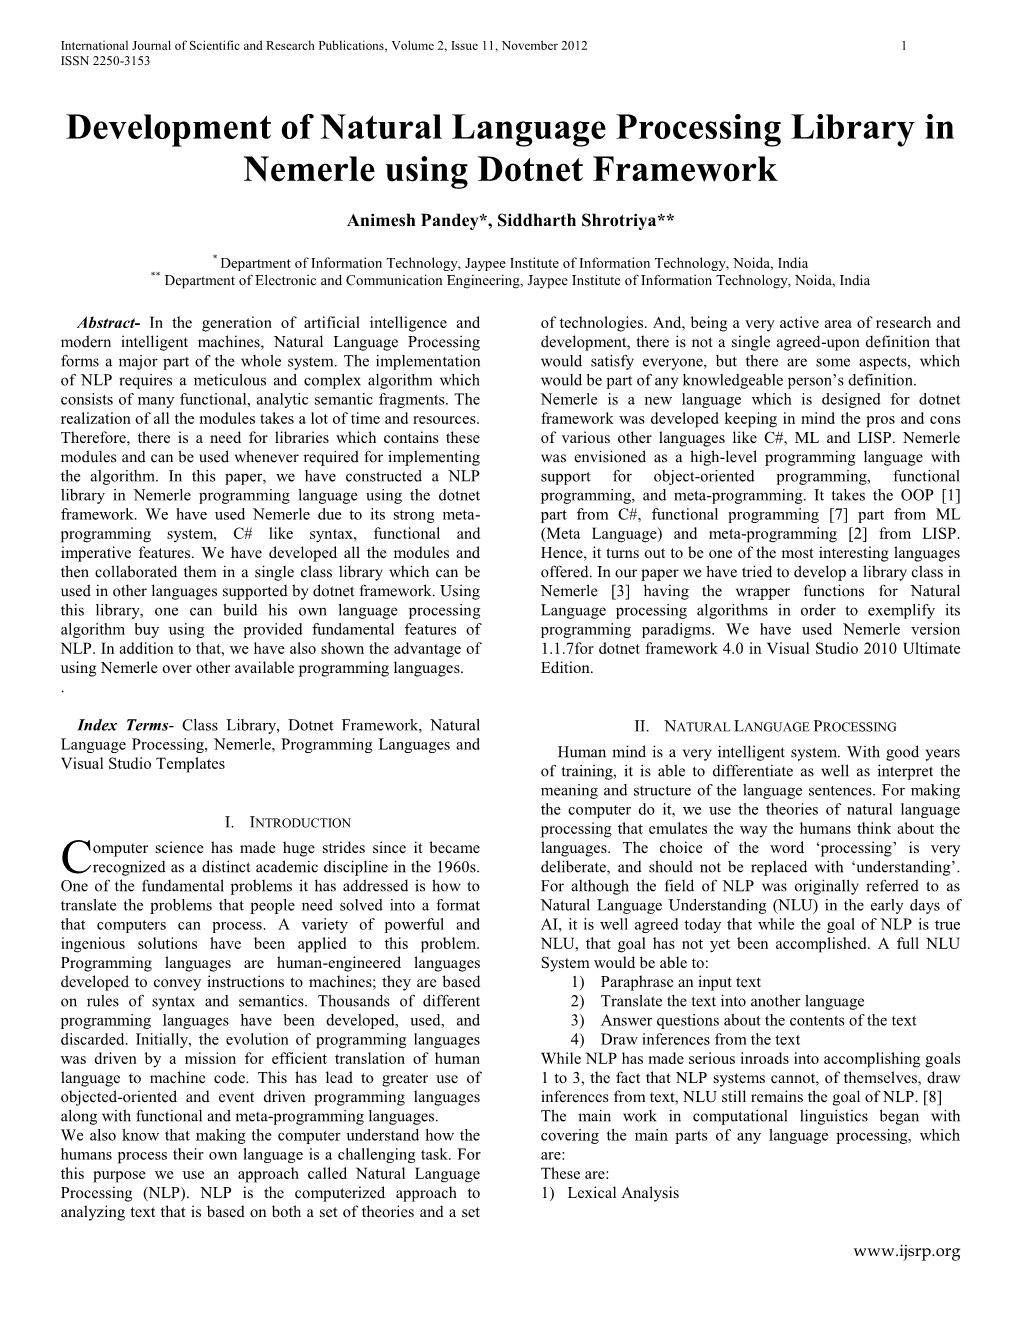 Development of Natural Language Processing Library in Nemerle Using Dotnet Framework